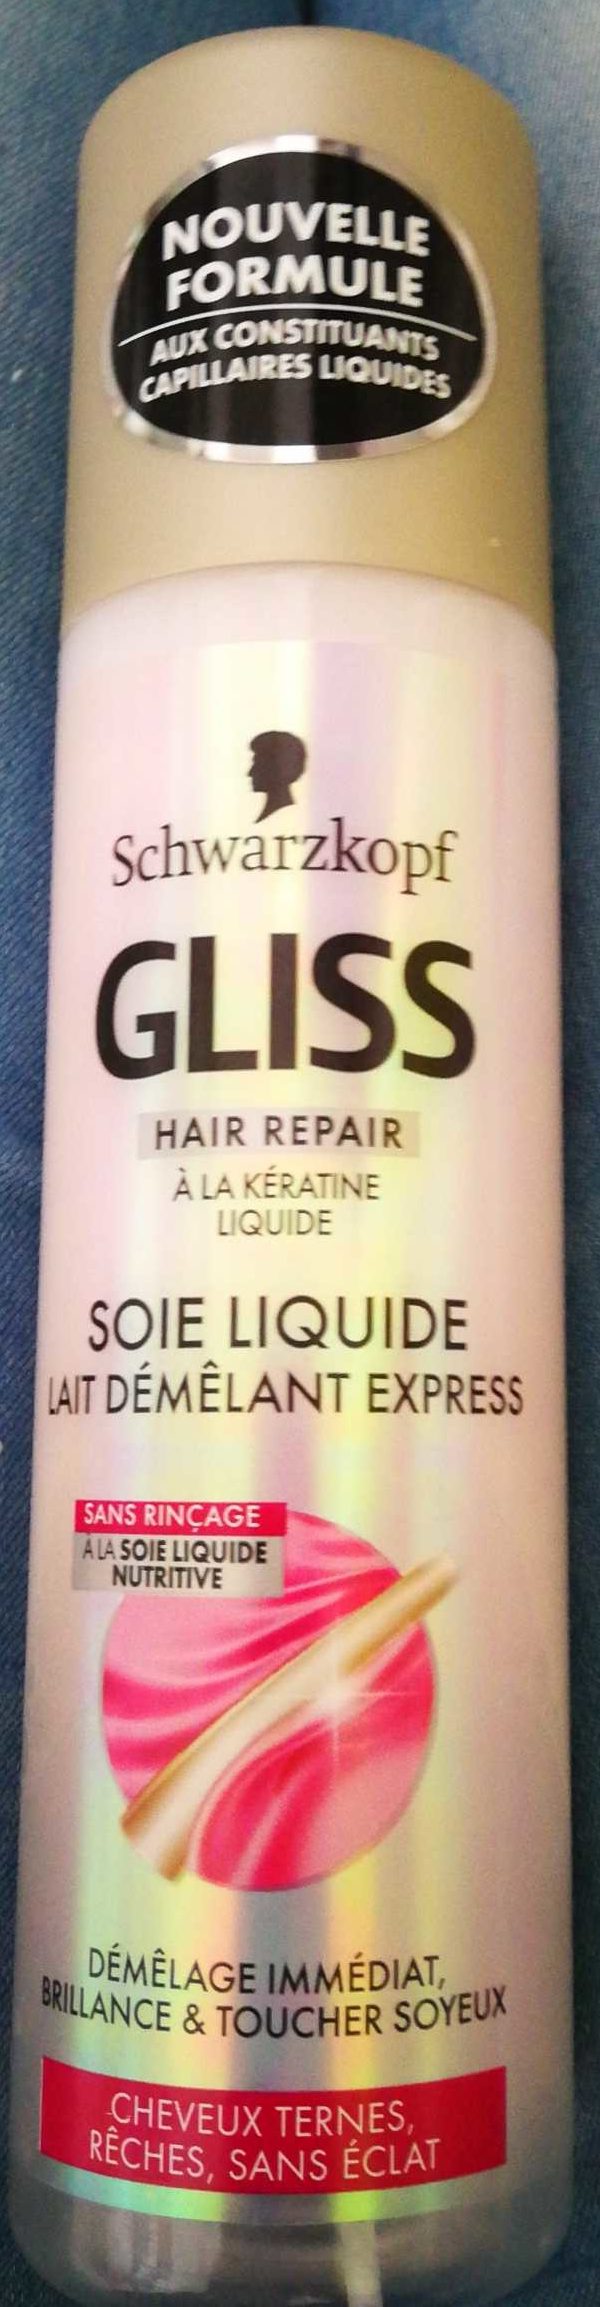 Gliss Soie liquide - Produkt - fr